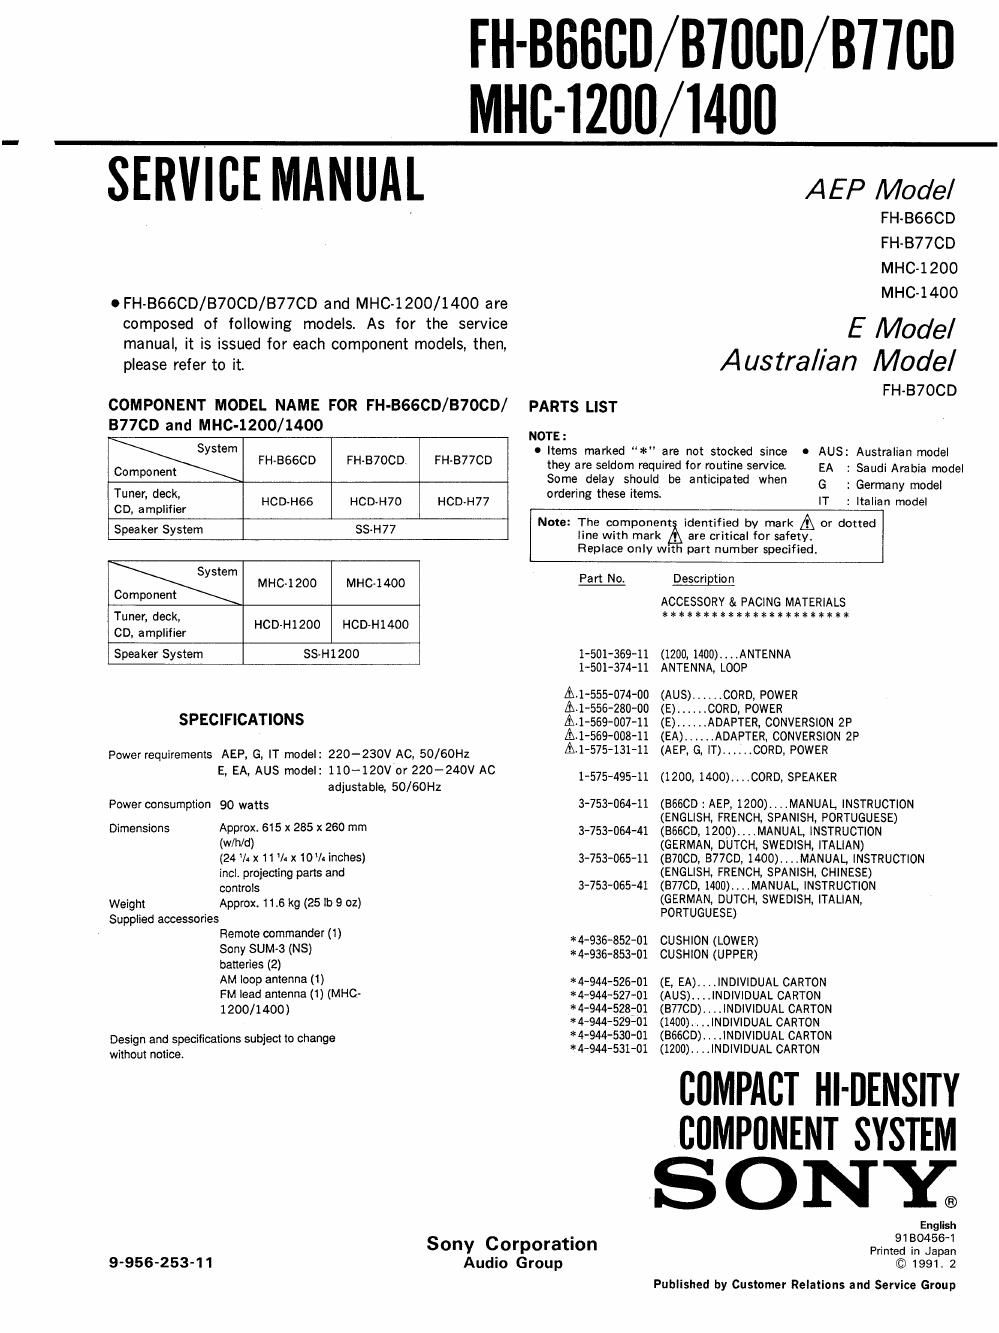 sony mhc 1400 service manual